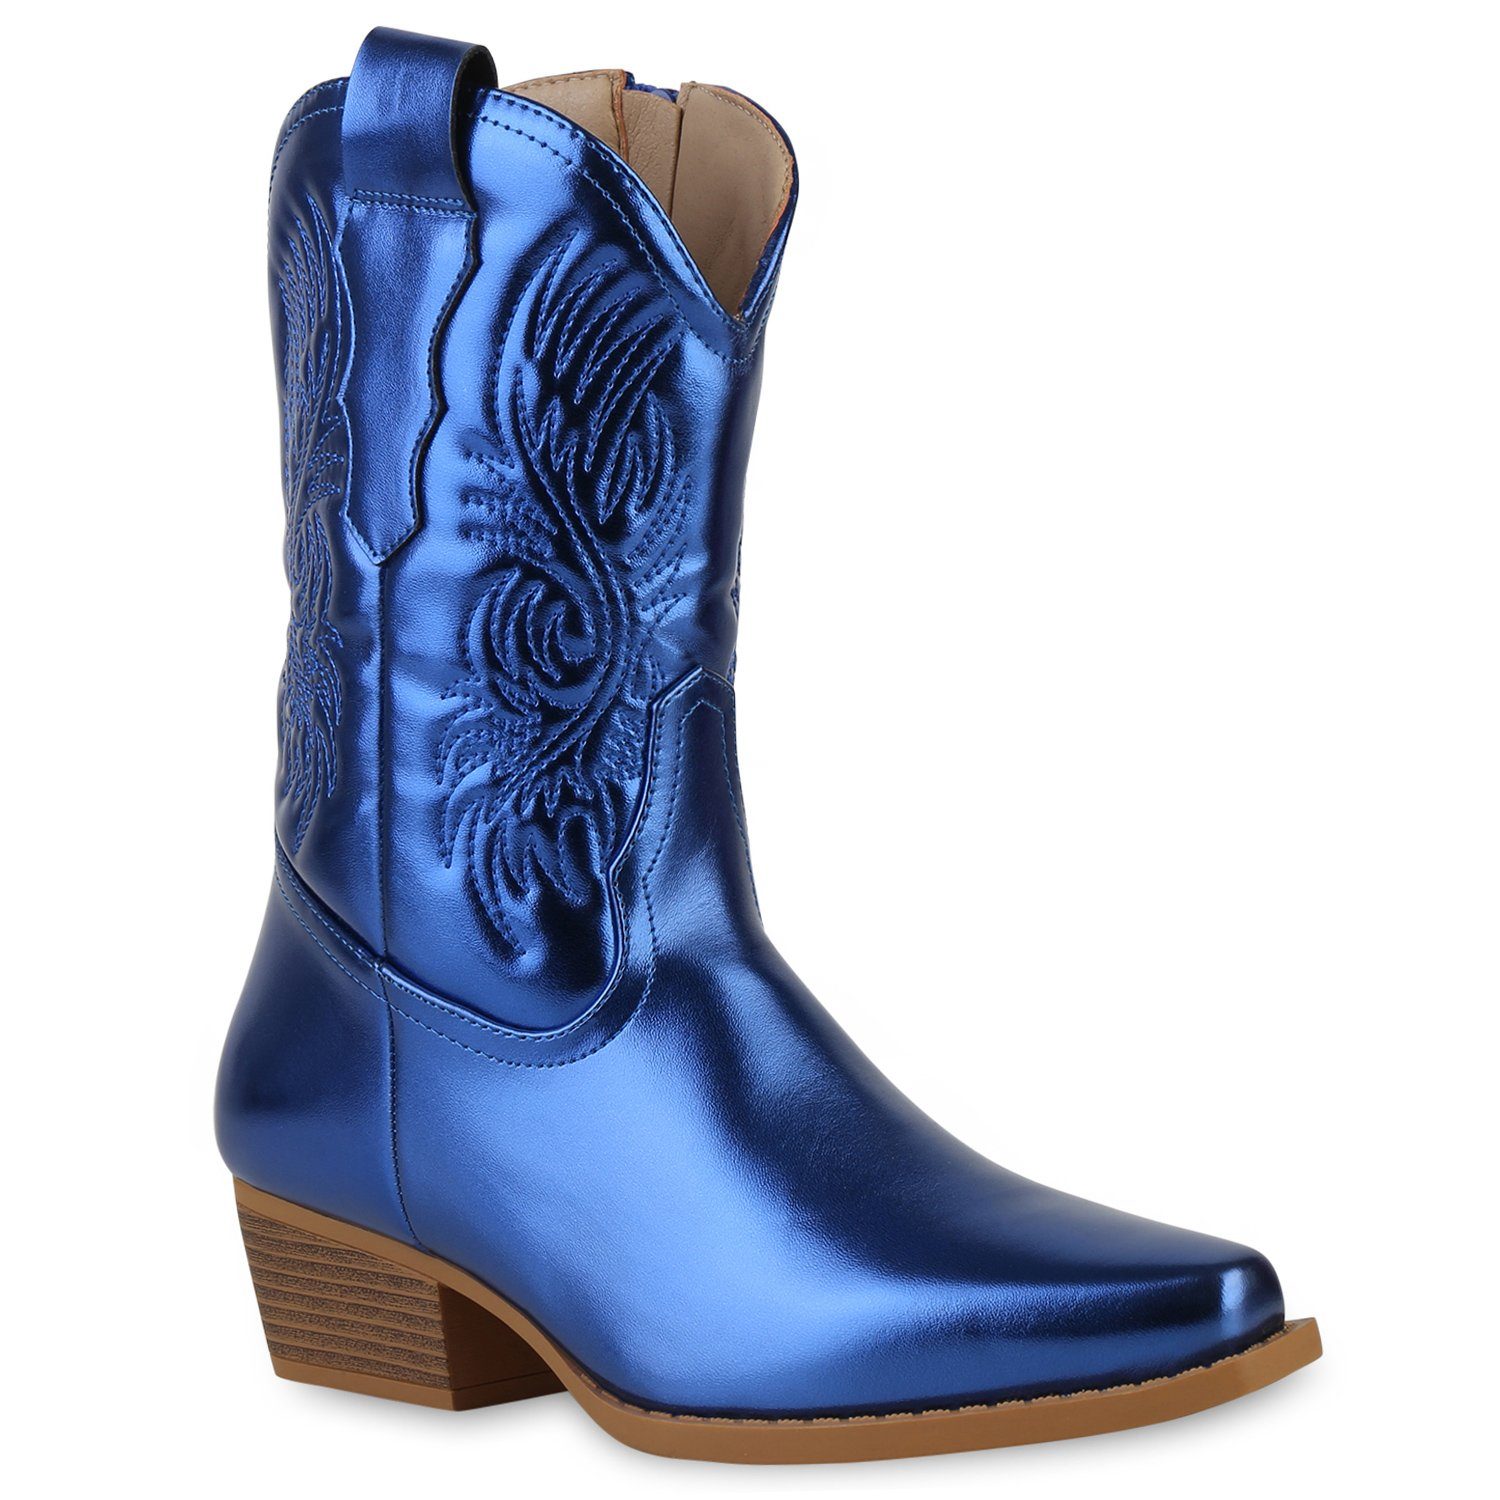 840254 Blau HILL Cowboy VAN Boots Metallic Schuhe